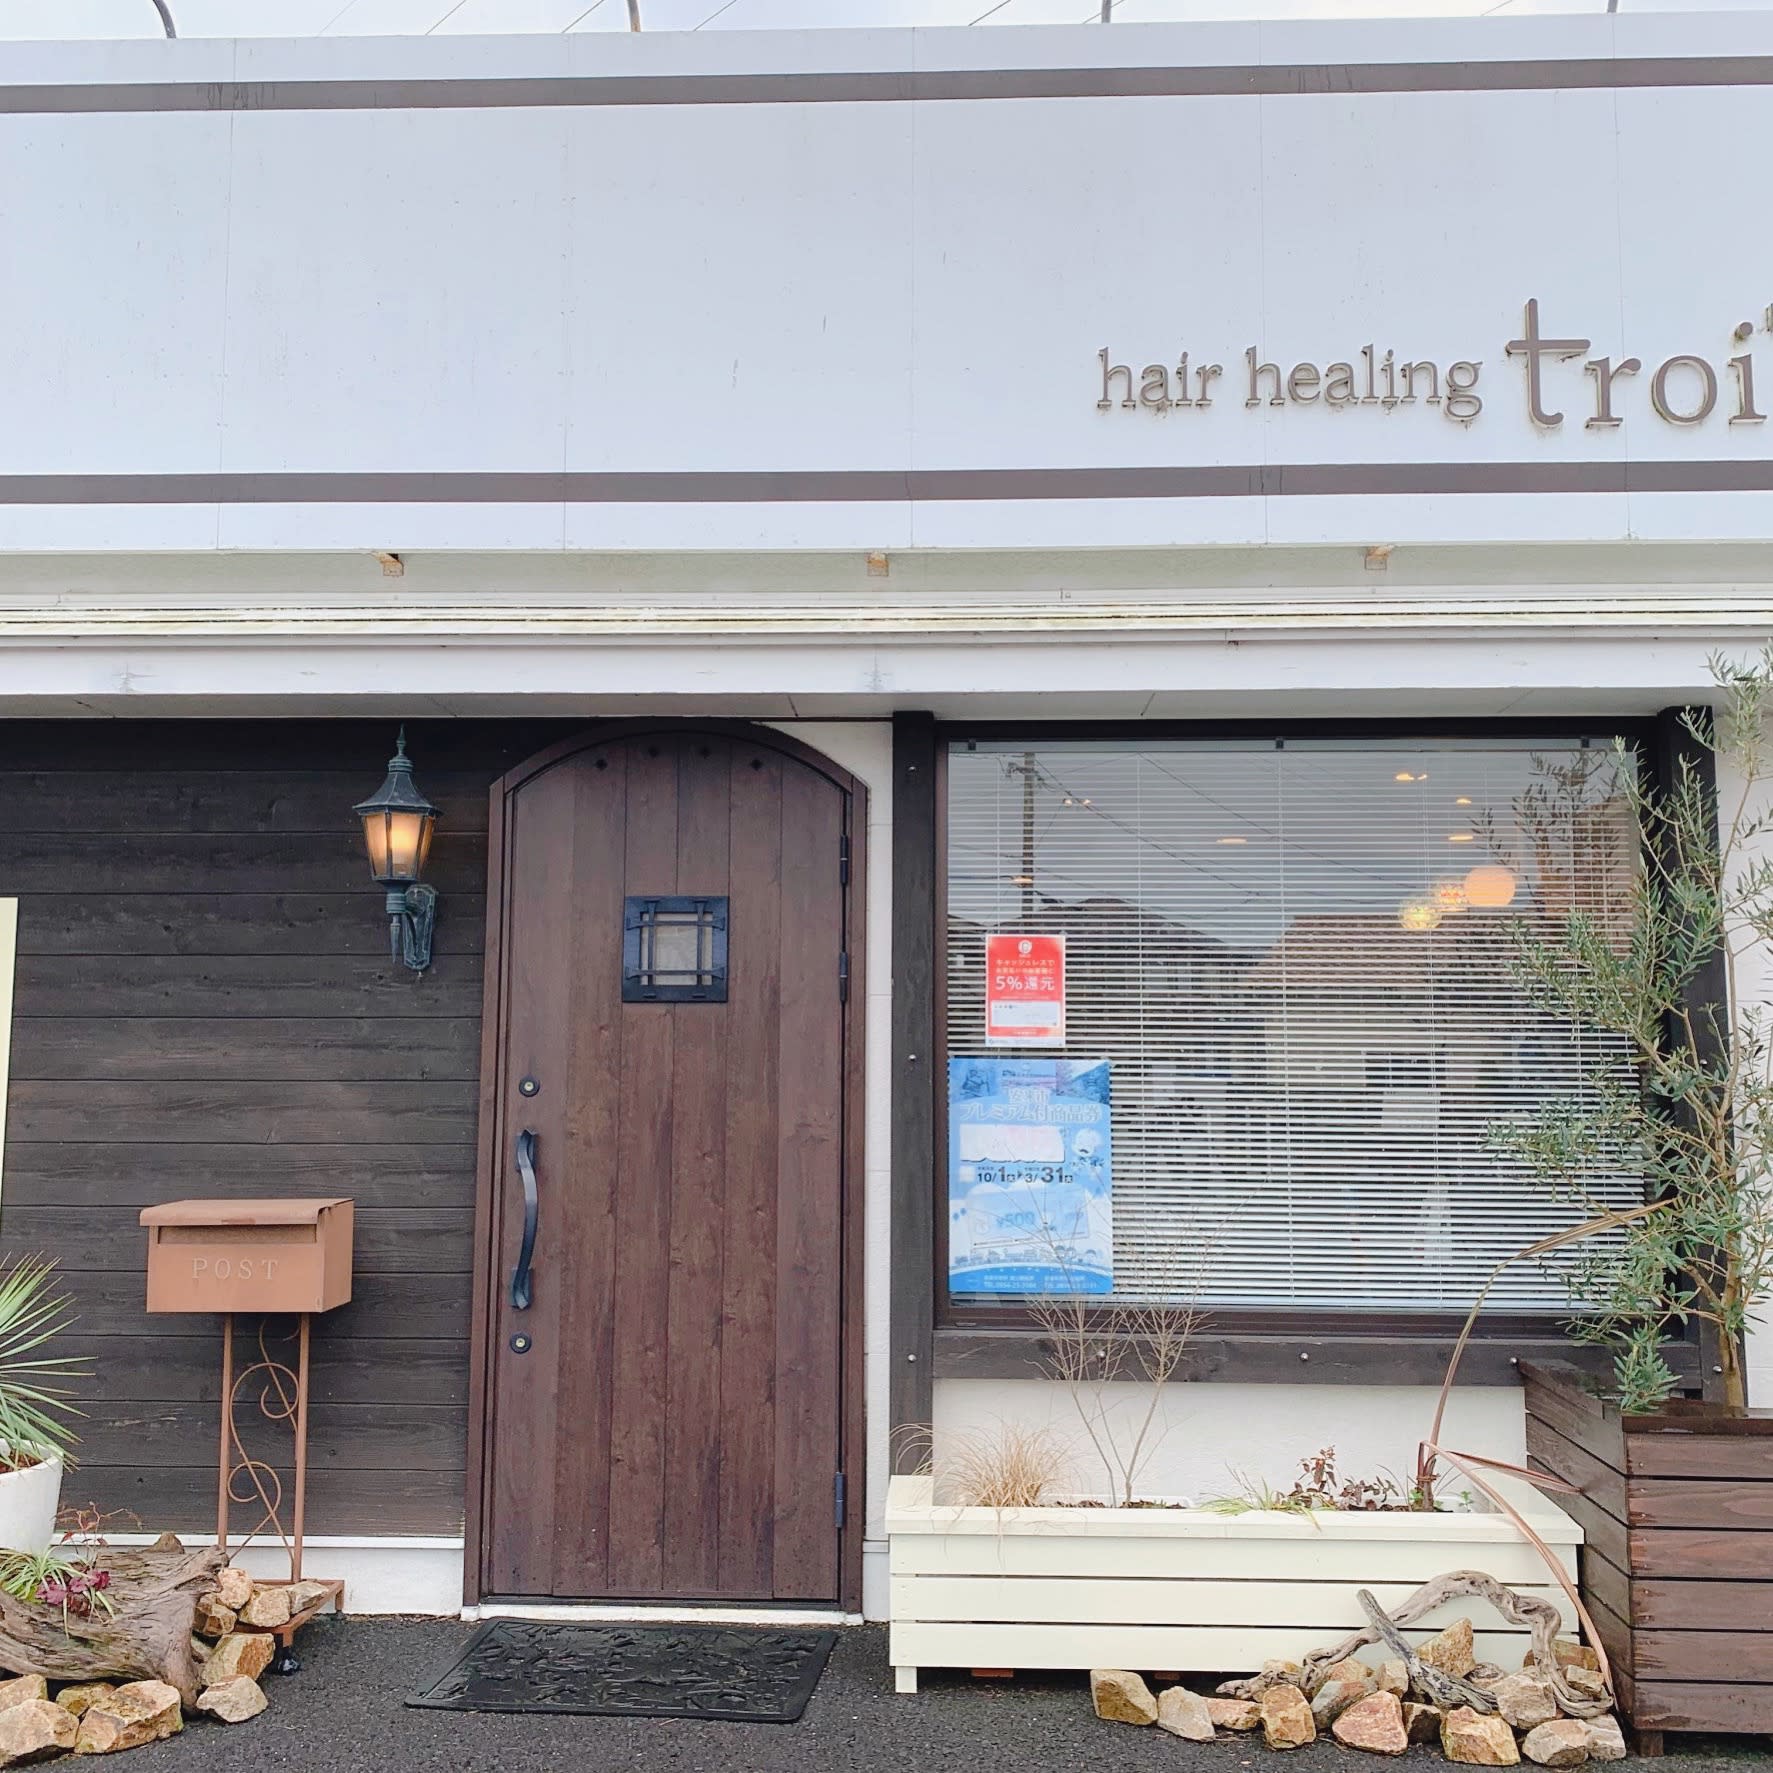 hair healing troisのアイキャッチ画像